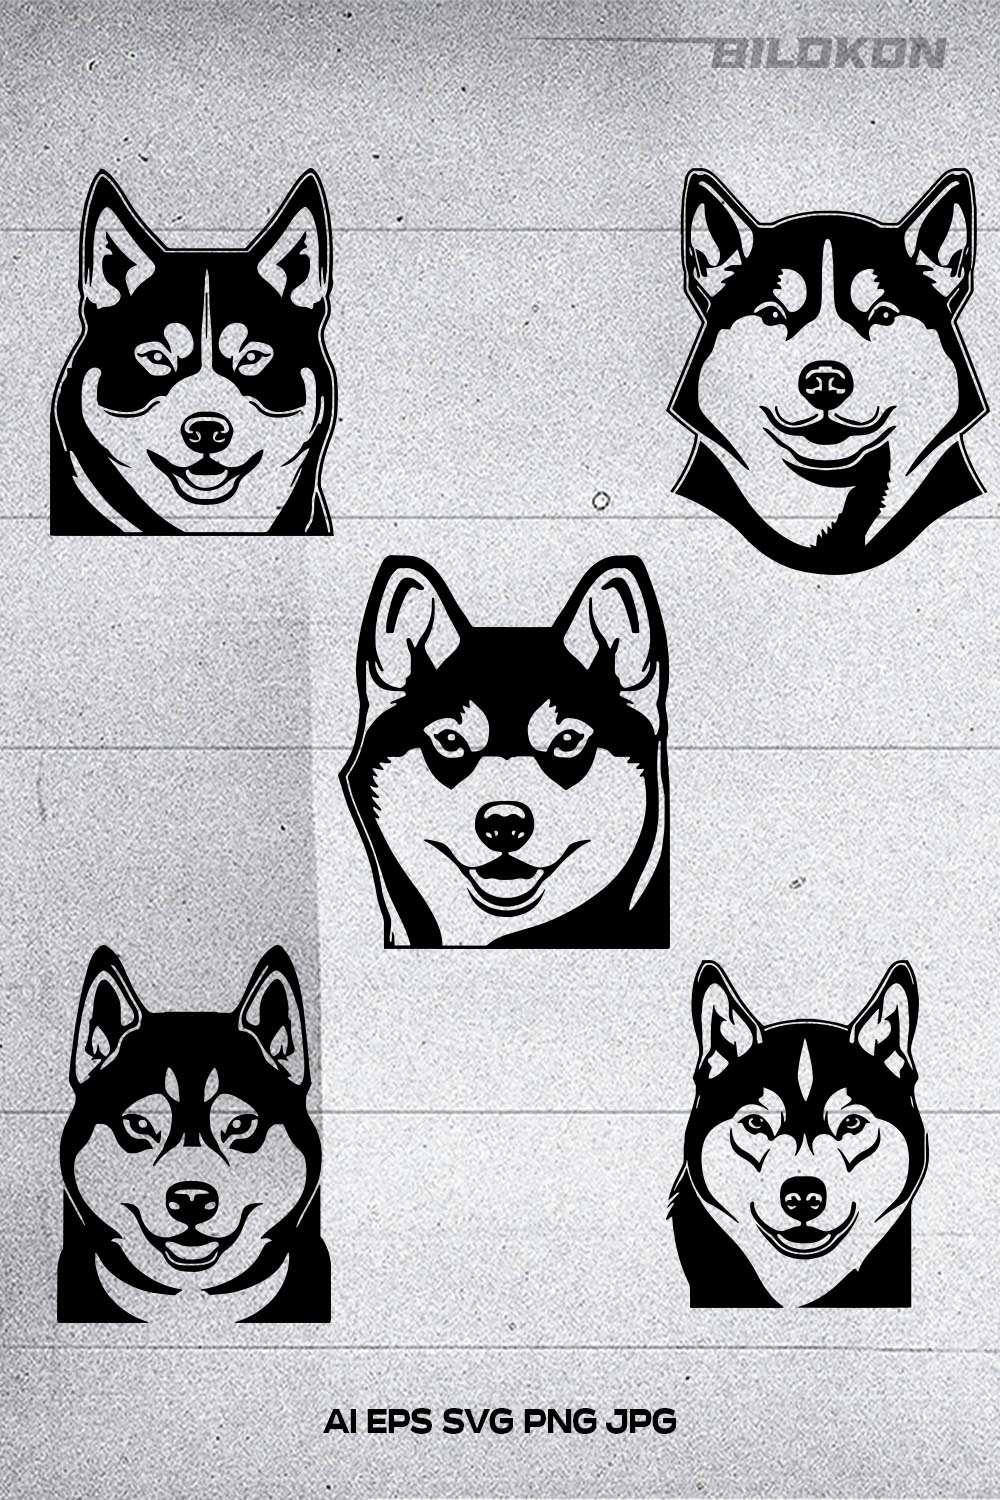 Shiba Inu dog face, SVG, Vector, Illustration pinterest preview image.